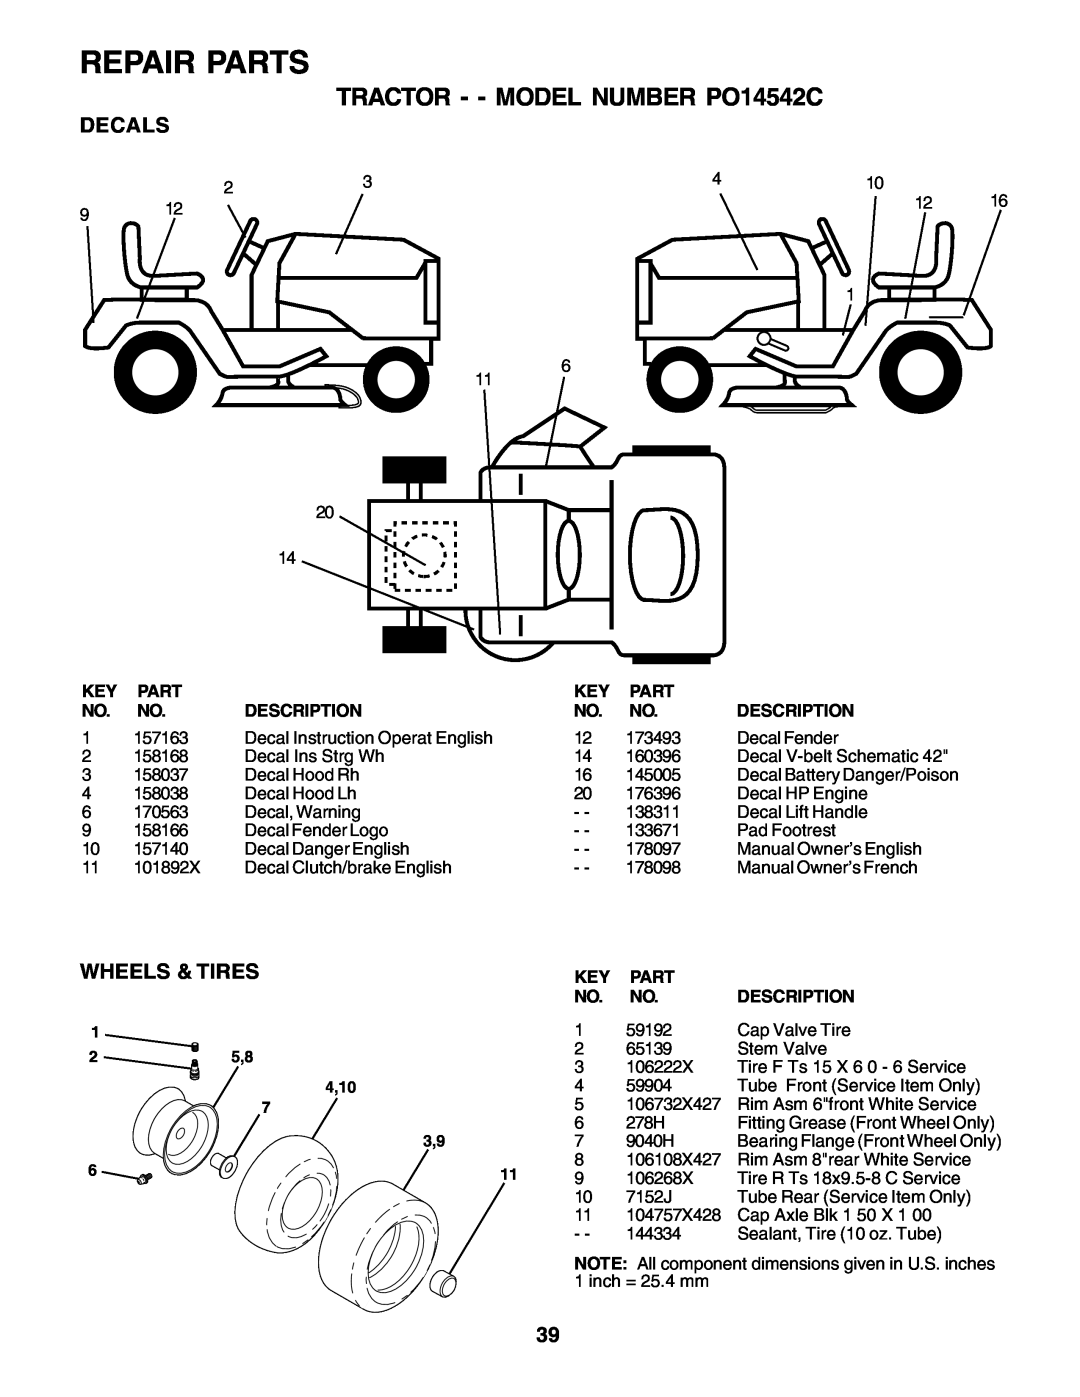 Poulan manual Repair Parts, TRACTOR - - MODEL NUMBER PO14542C, Decals, Wheels & Tires, Description 